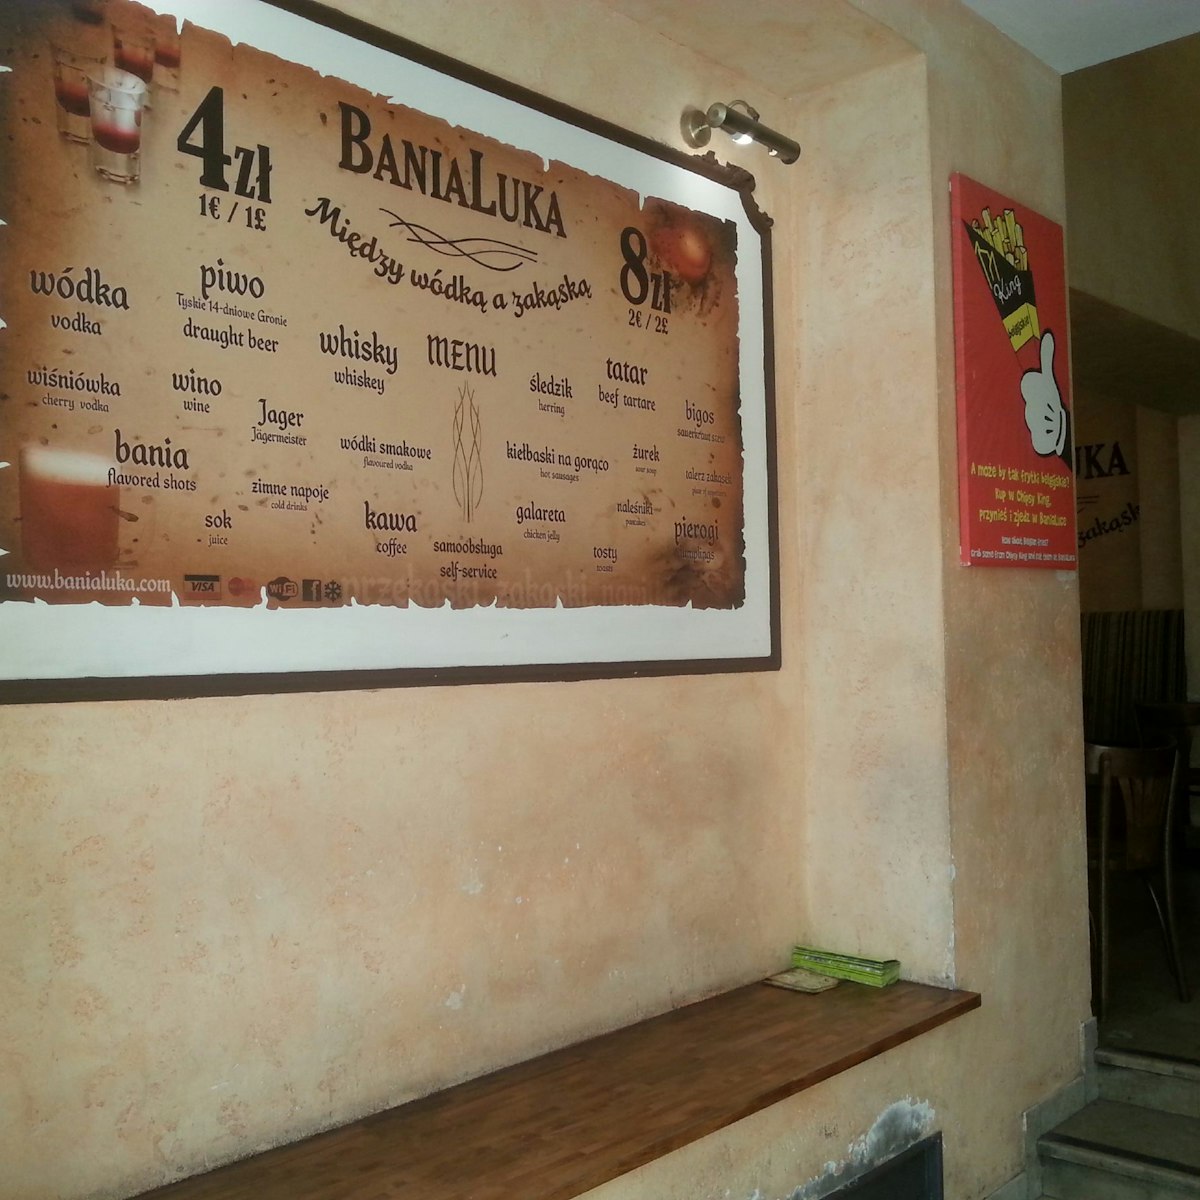 BaniaLuka's menu in the entrance